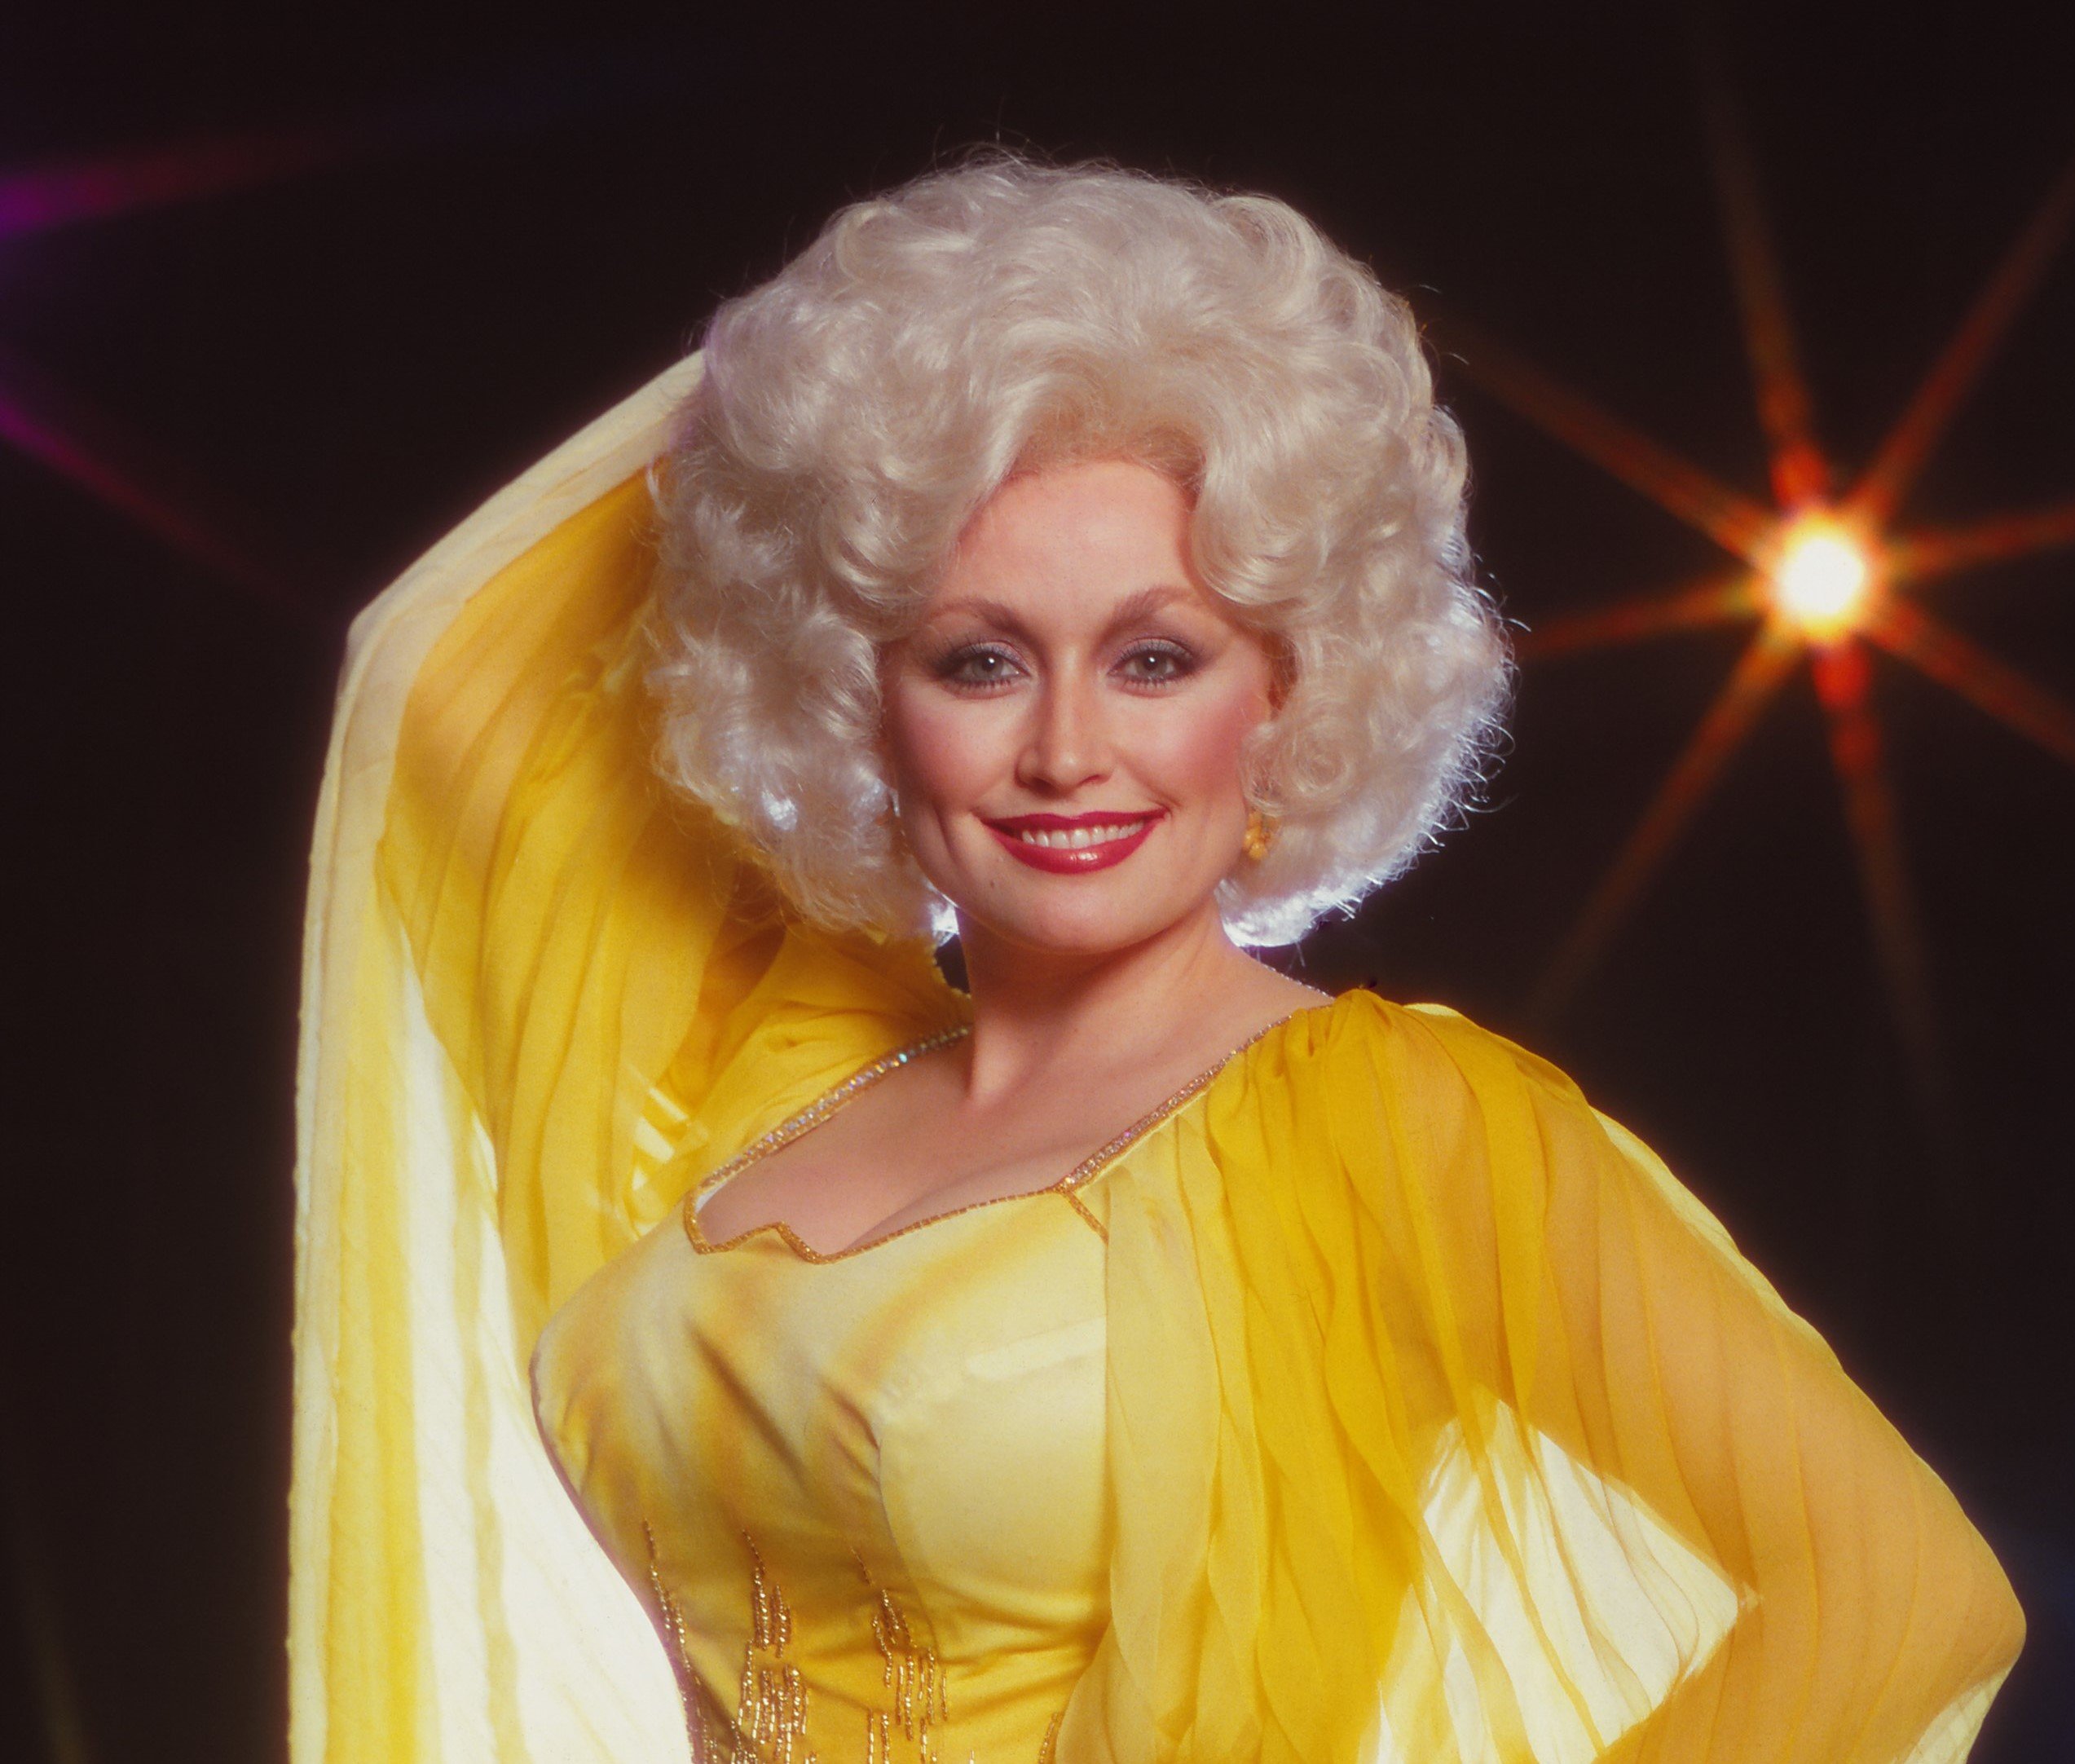 Dolly Parton wearing a sheer yellow dress